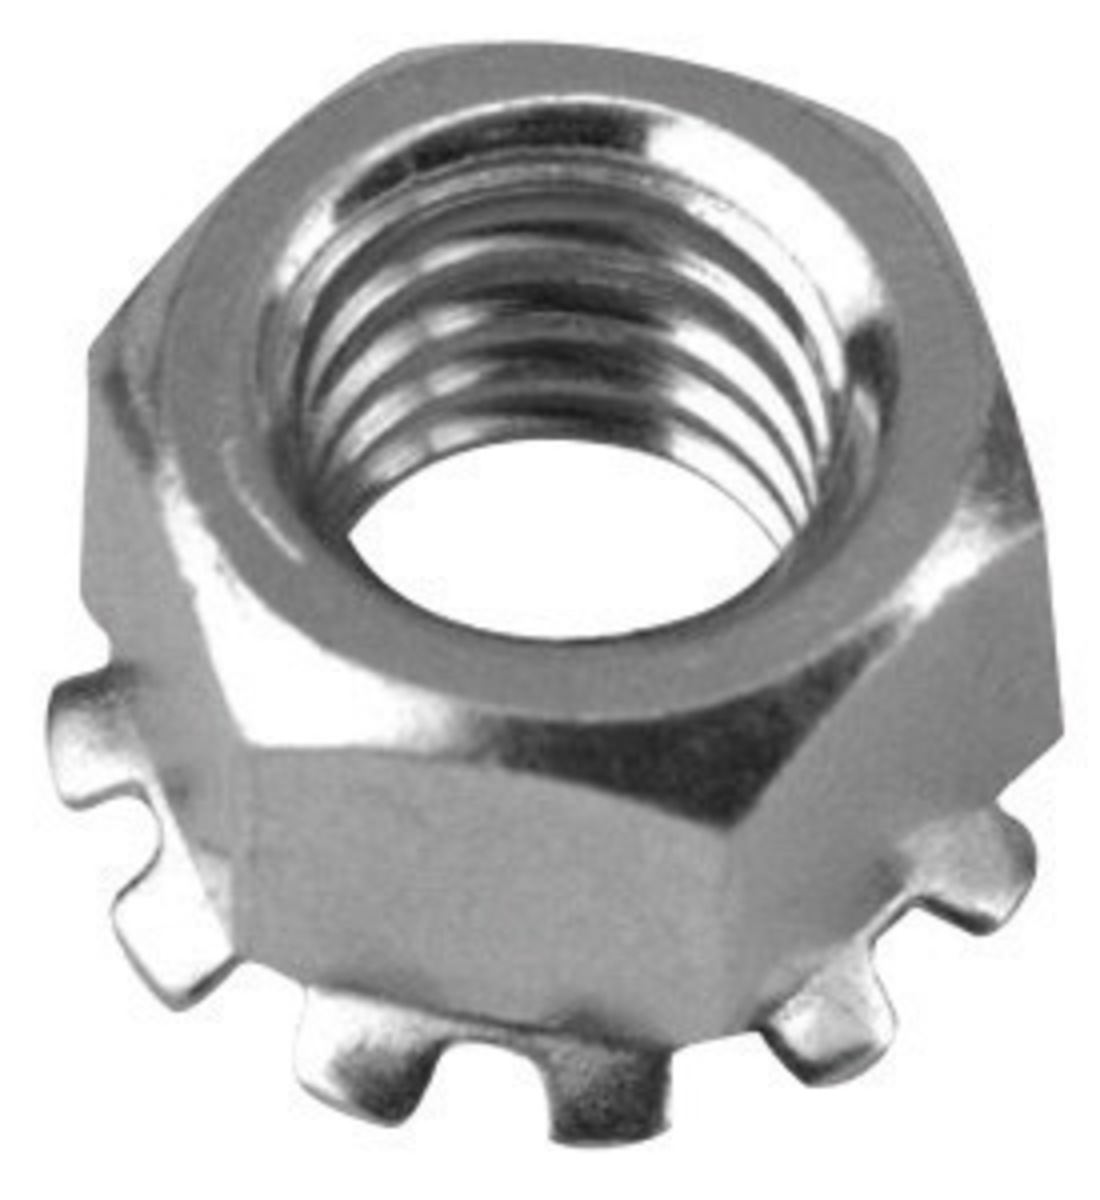 Qty 100 Stainless Steel Keps K Lock Nut UNF #10-32 